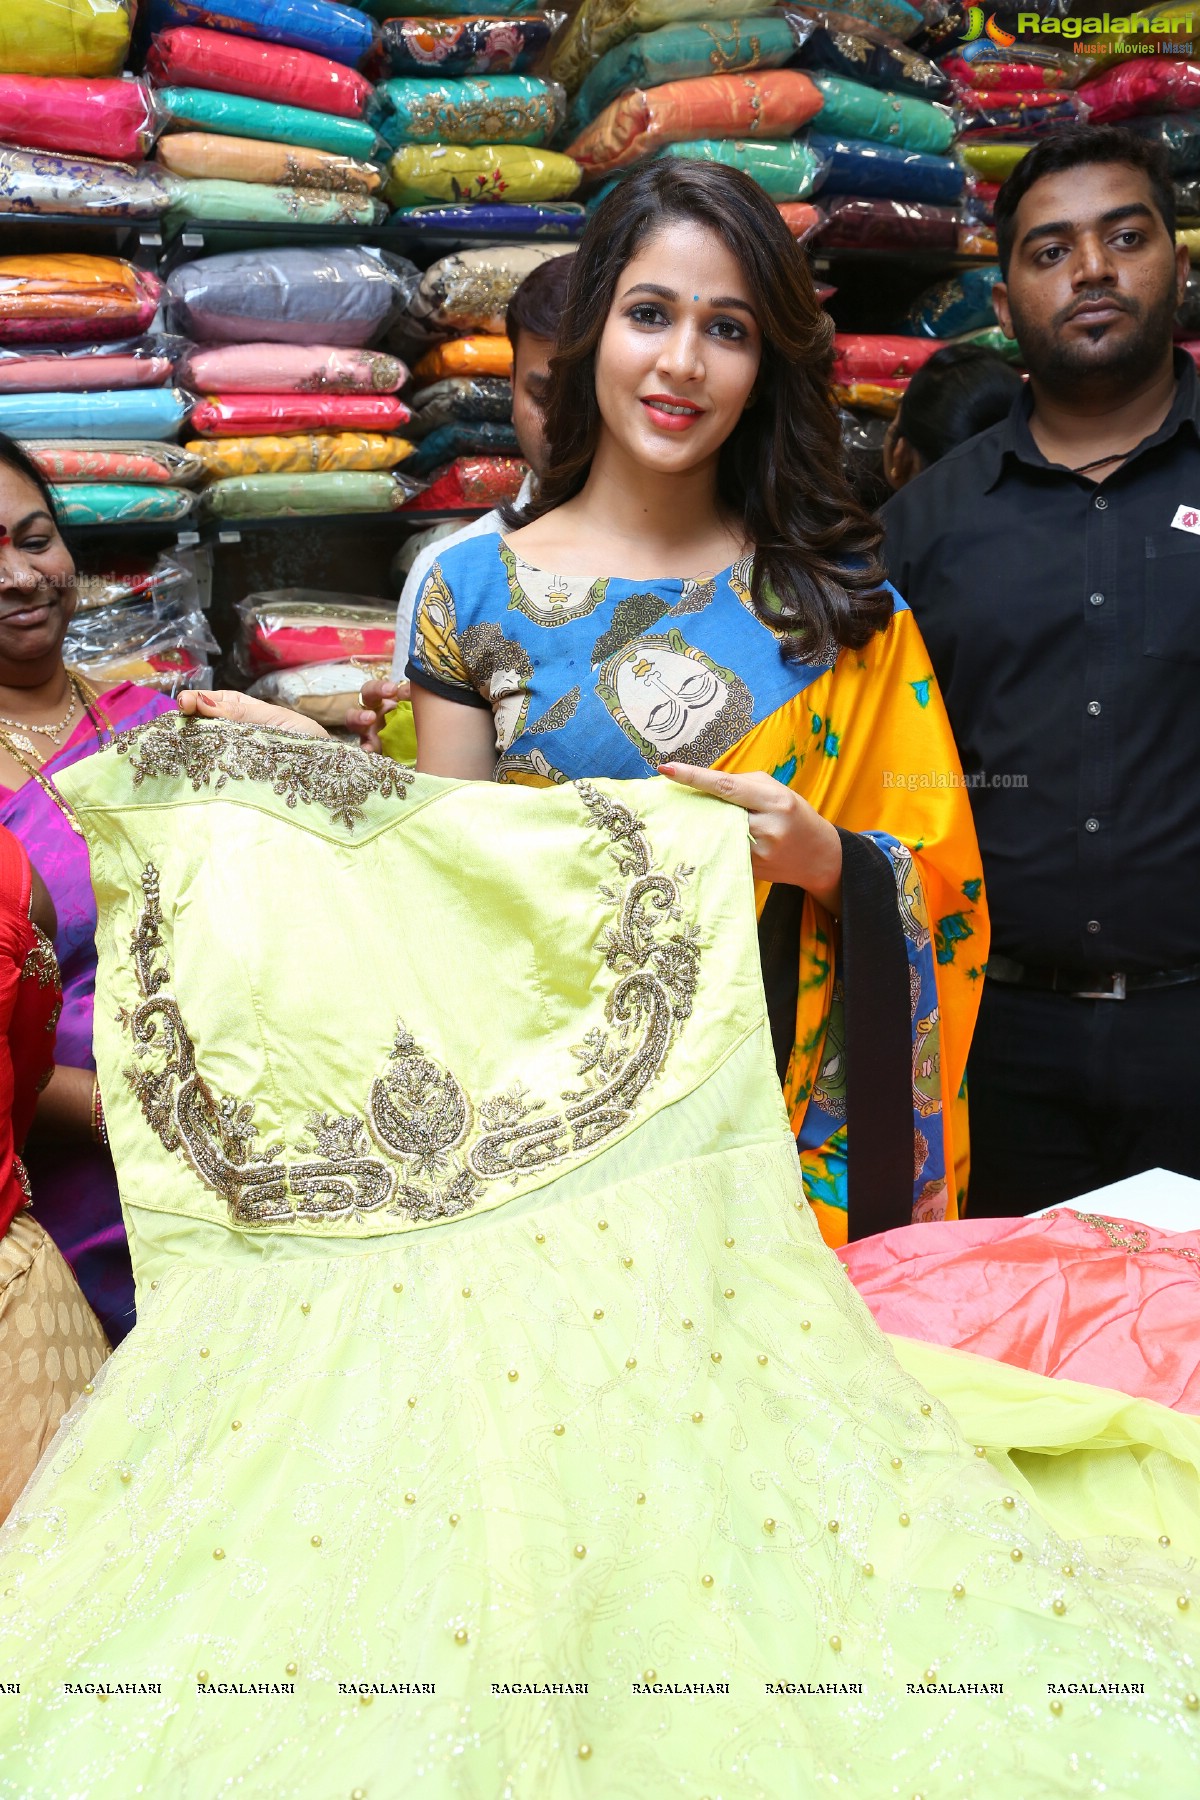 Arihant Fashion World Launched By Lavanya Tripathi @ AS Rao Nagar